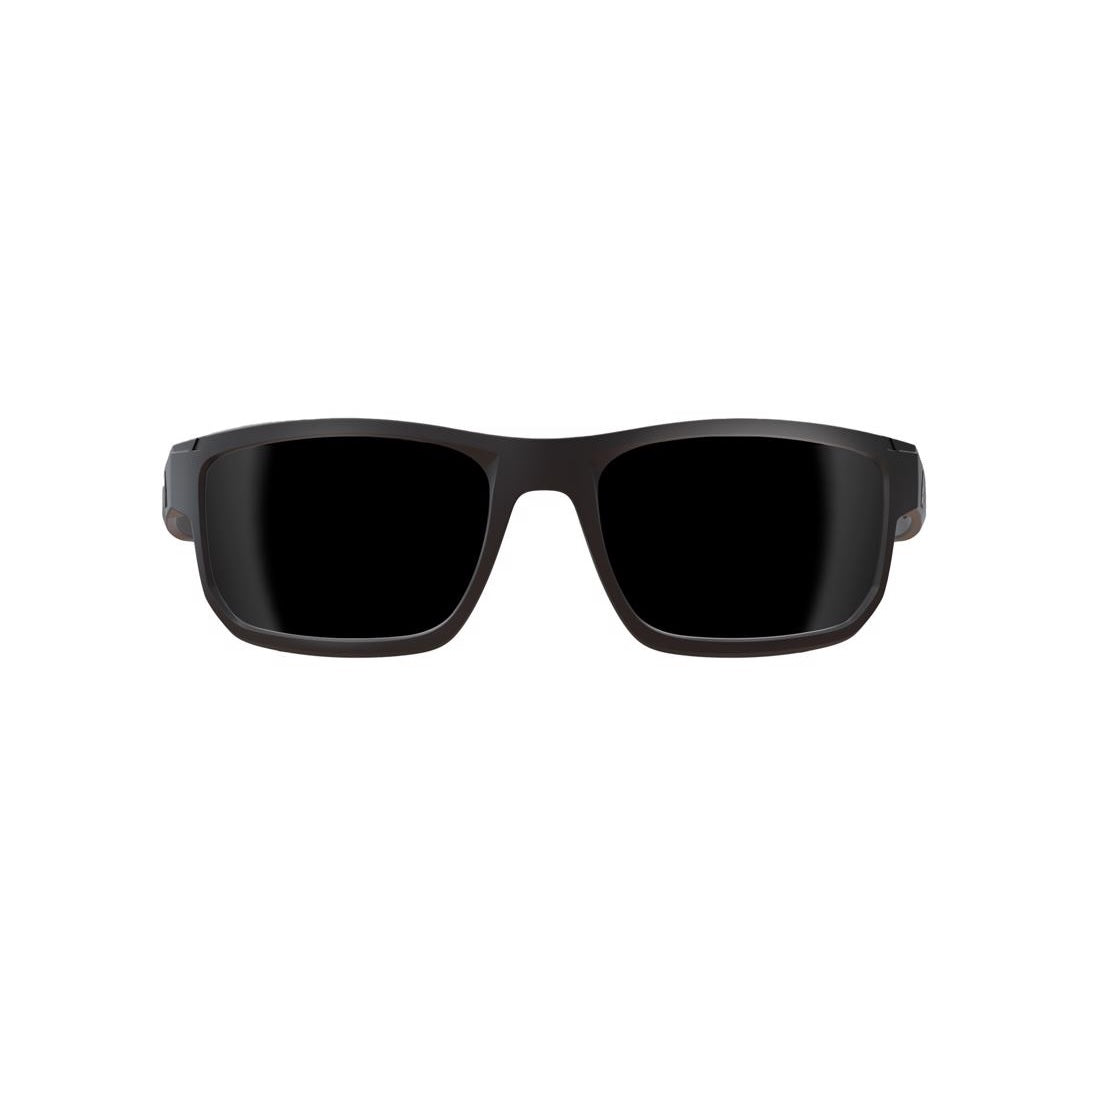 Edge ZDF116VS Defiance Anti-Fog Wayfarer Safety Glasses, Black Frame